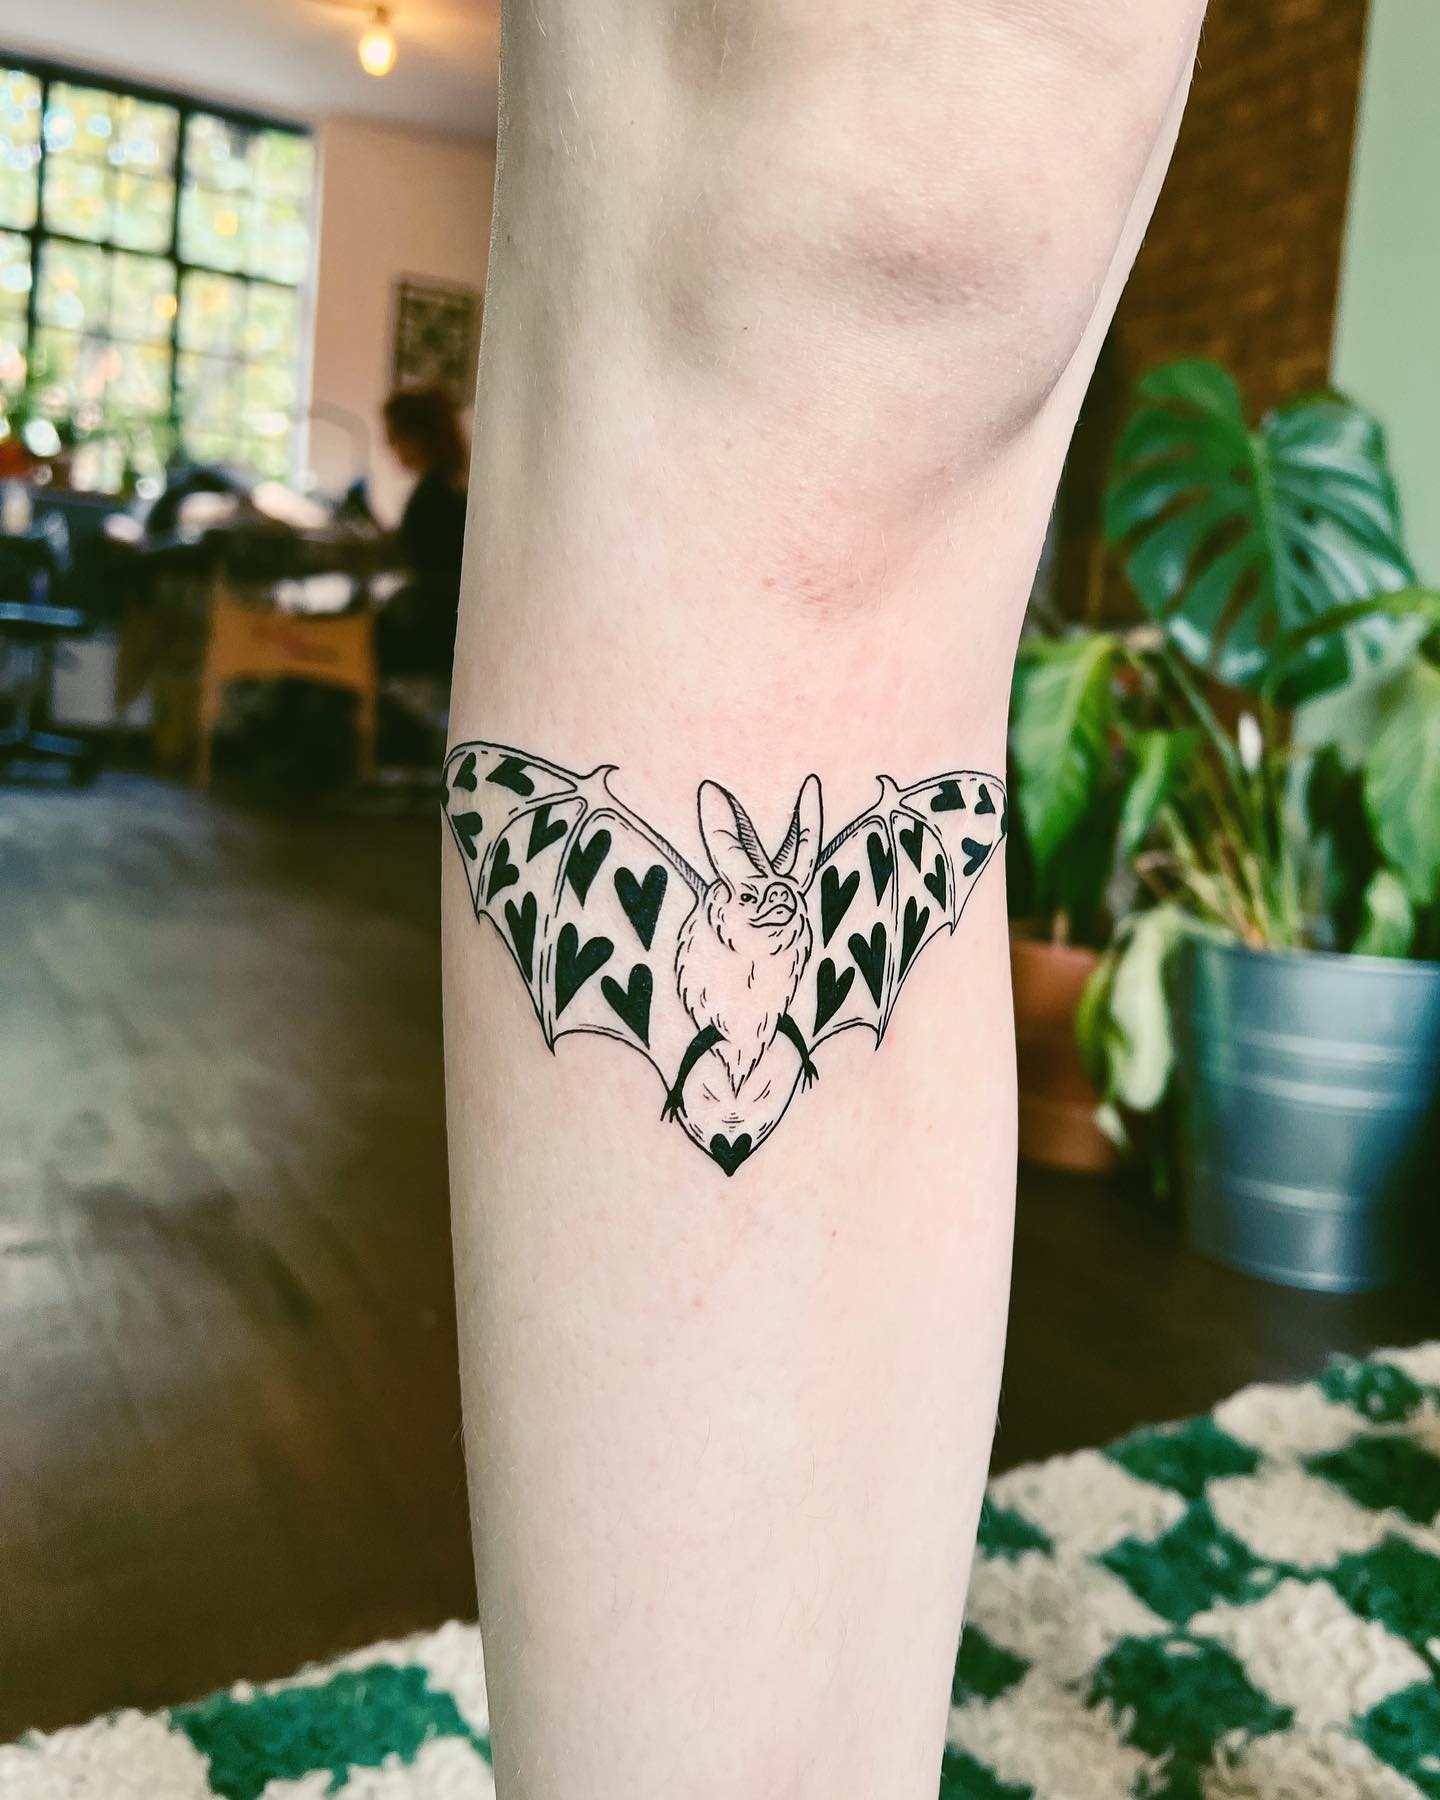 30 Cool Bat tattoo Designs For Men and Women